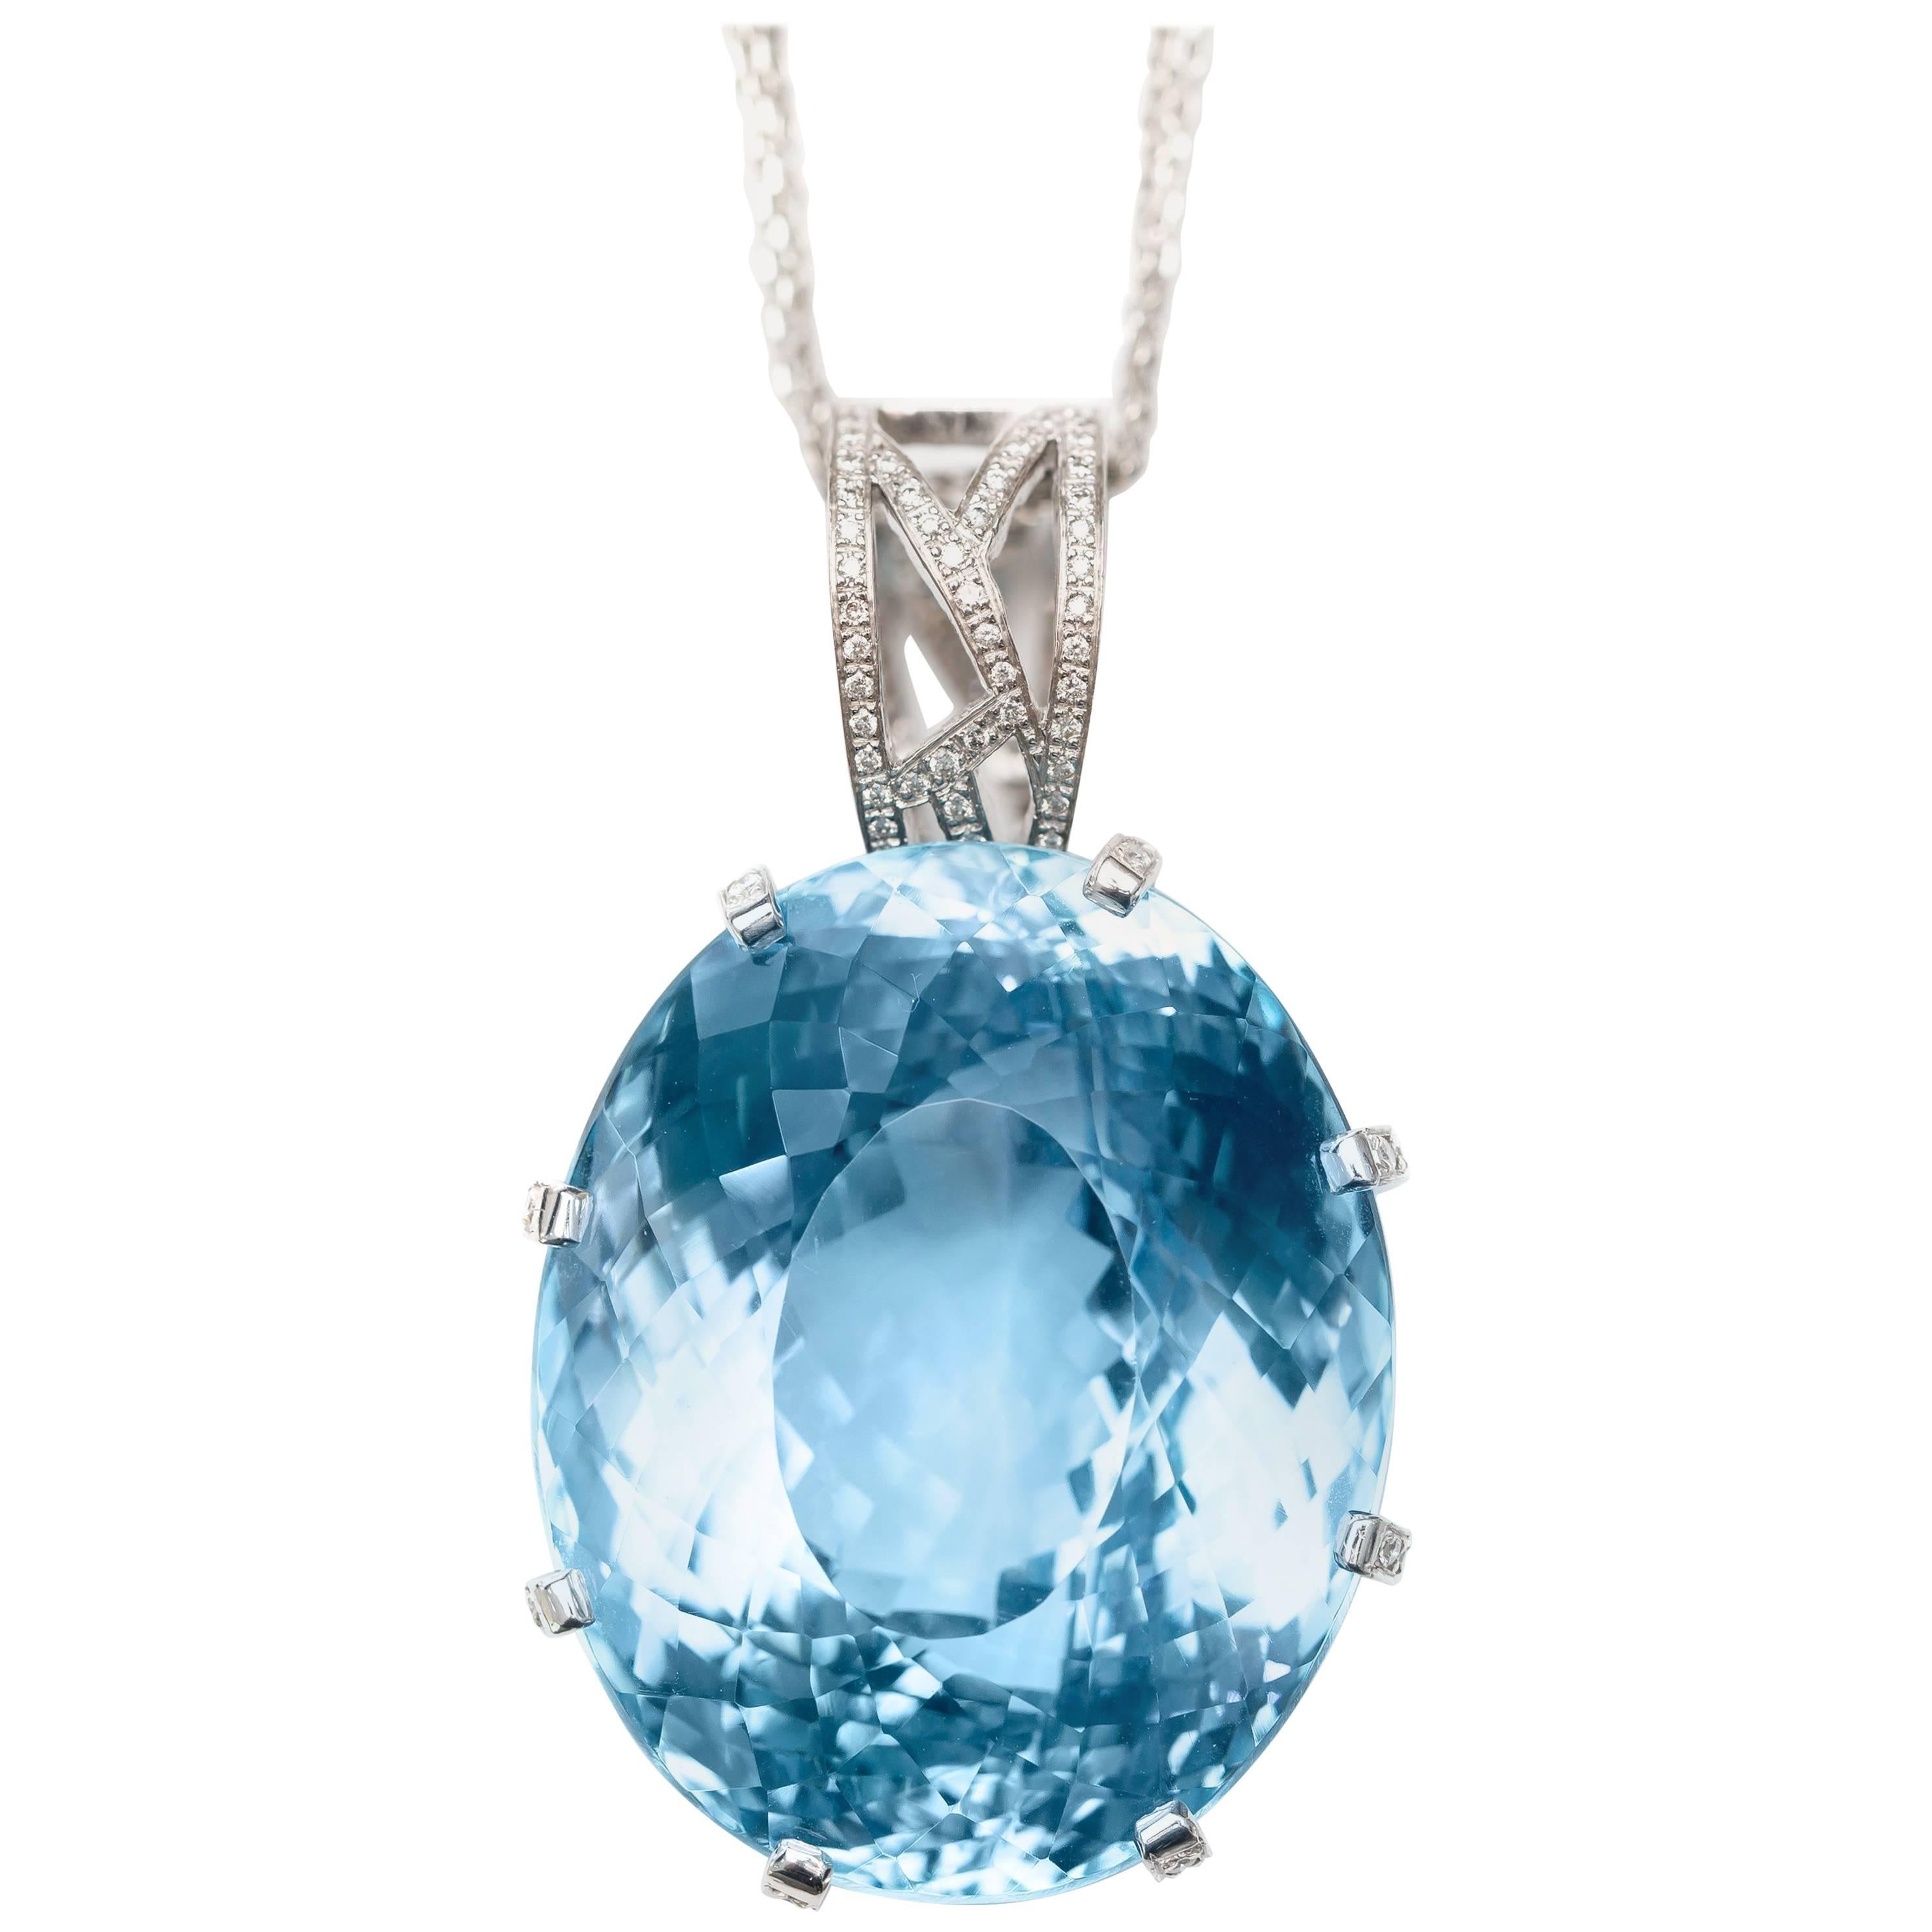 226.34 Carat Blue Topaz 18 Karat White Gold with Diamond Mount Pendant Necklace